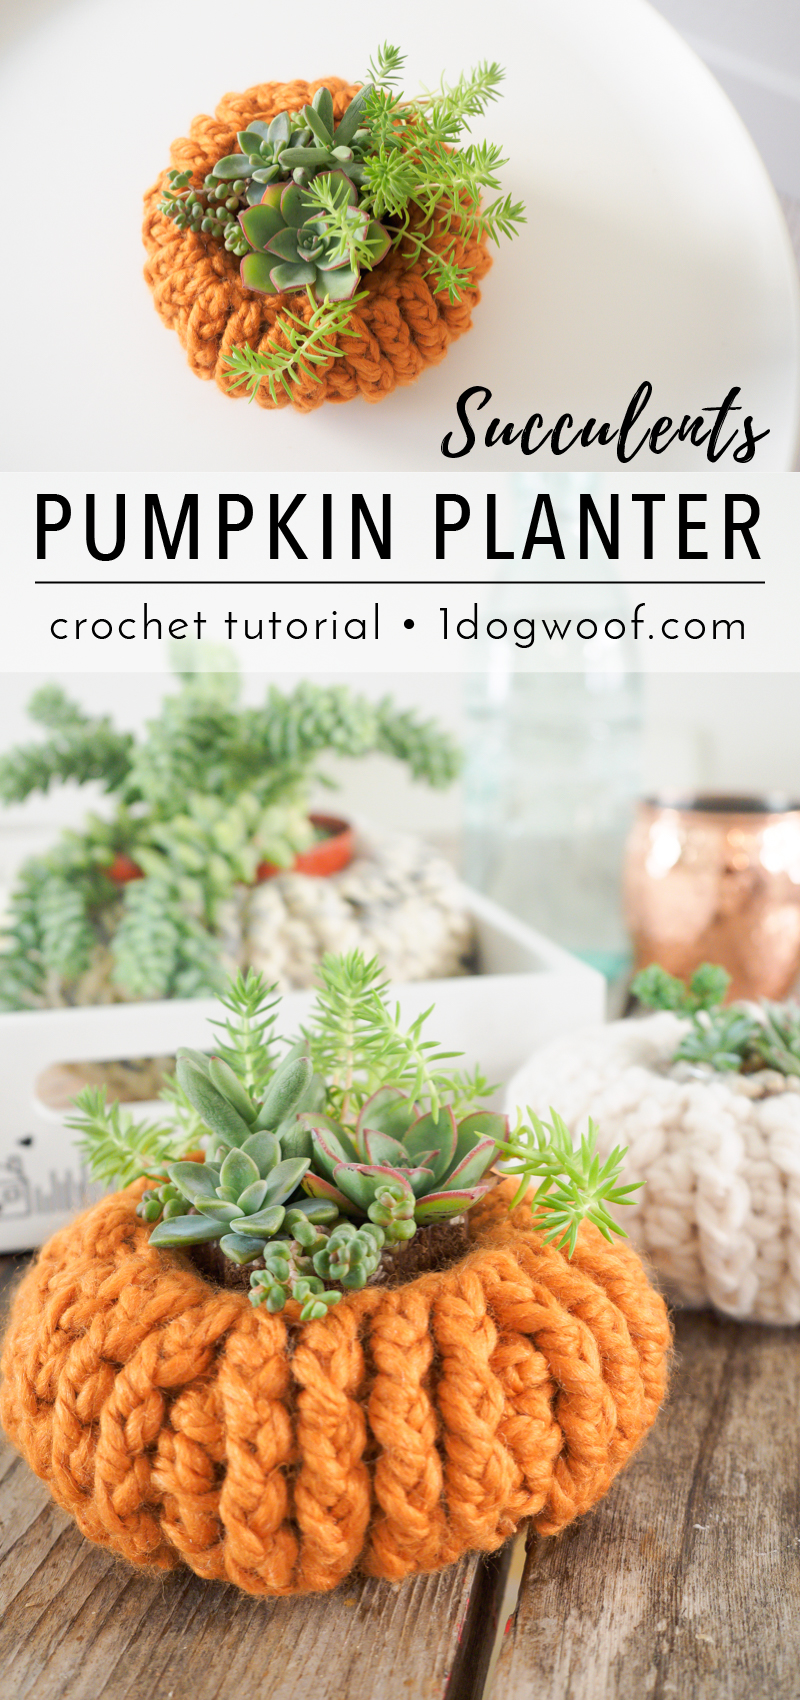 Simple crochet succulents pumpkin planters. Free pattern at 1dogwoof.com